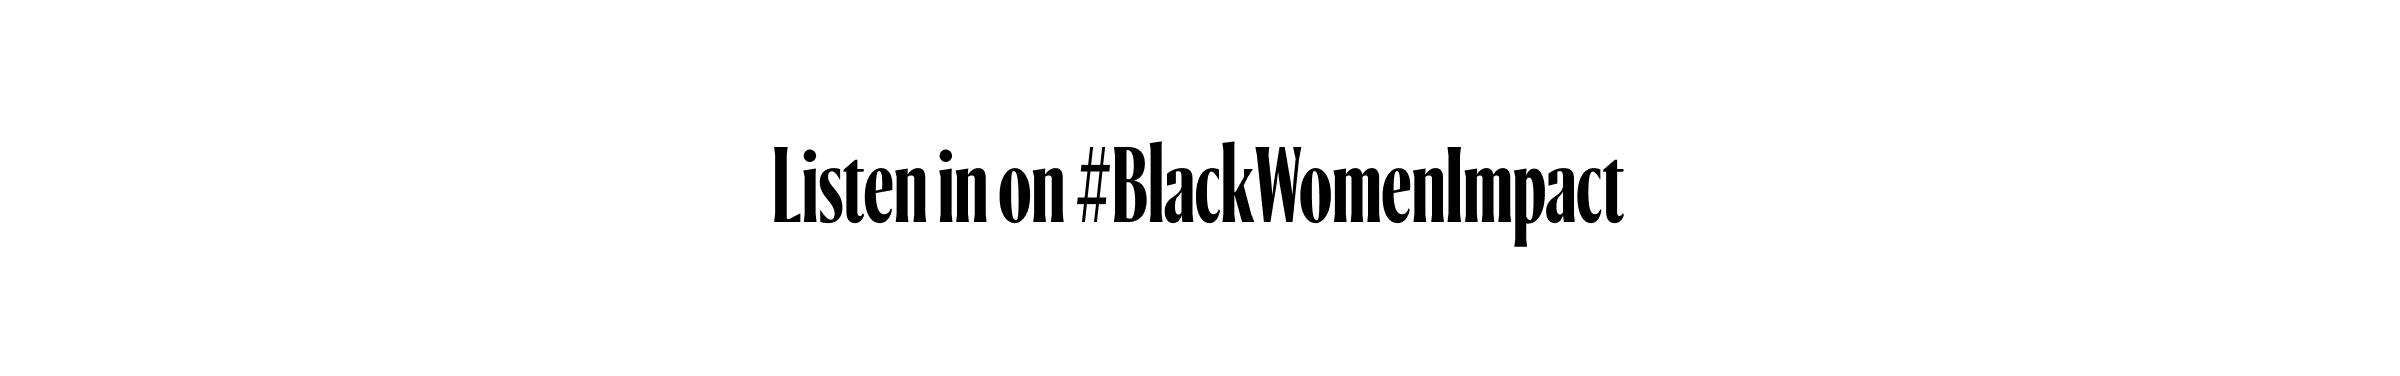 Listen in on hashtag Black Women Impact